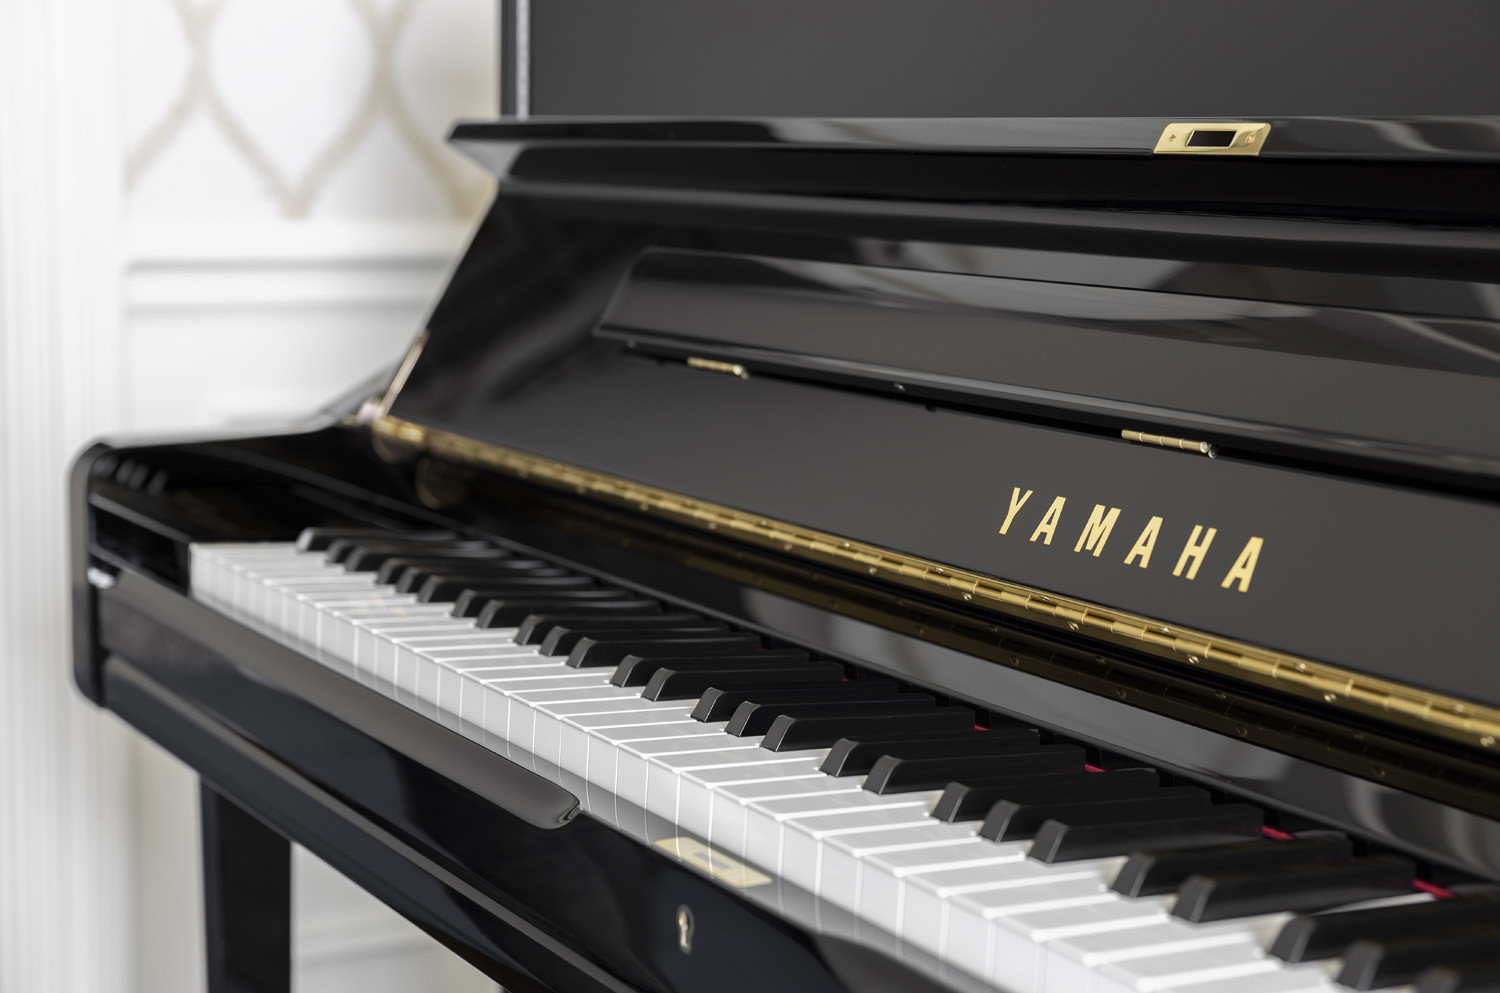 U1 and U3 Upright Pianos - Yamaha USA